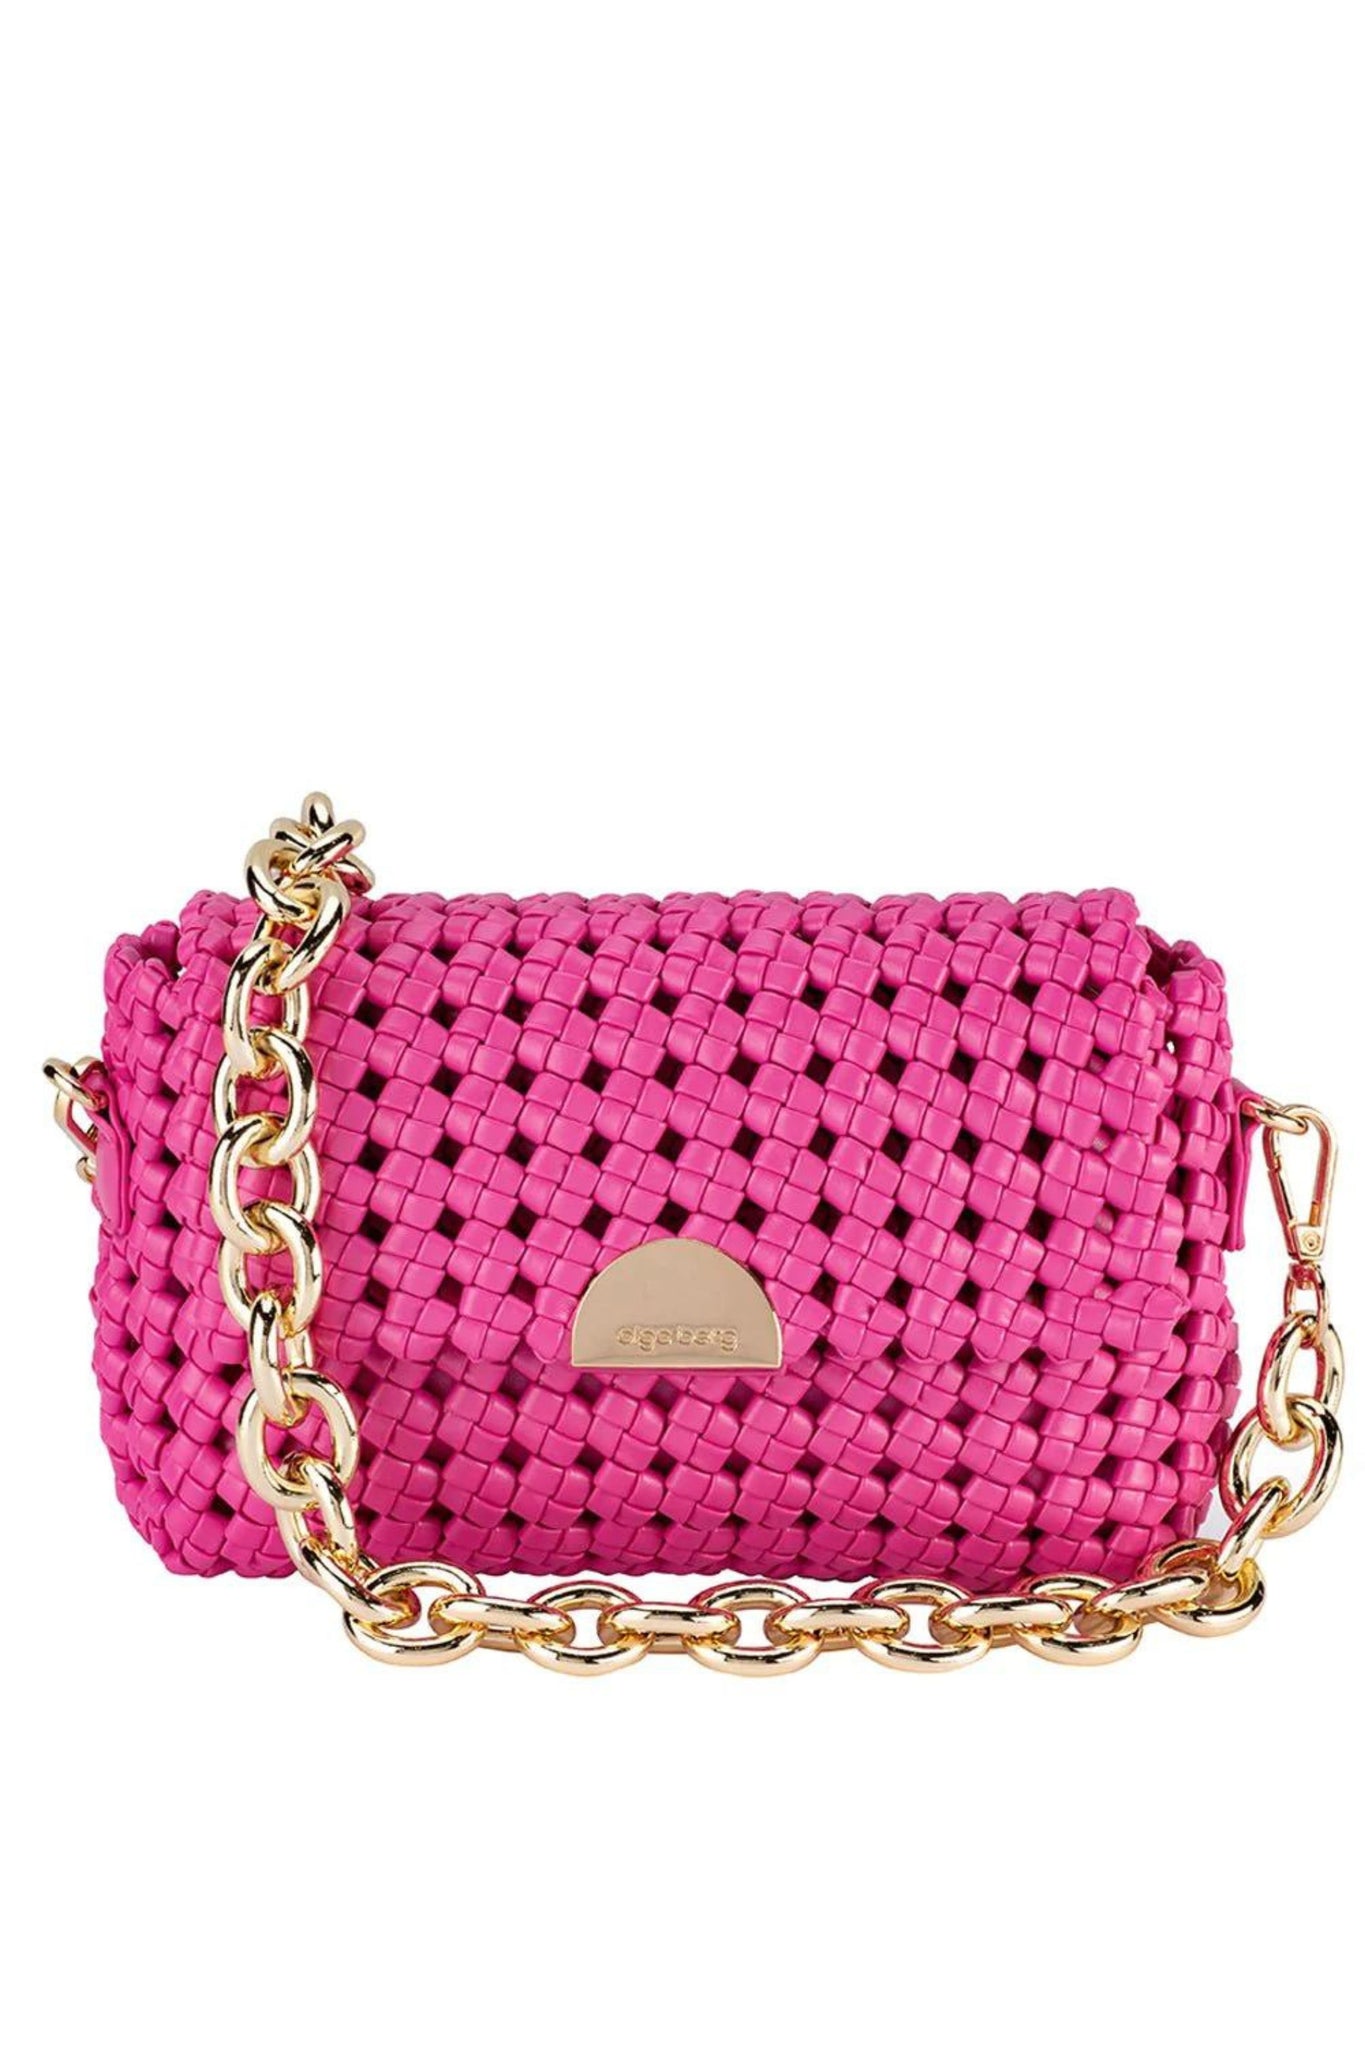 Giselle Woven Shoulder Bag - Fuchsia Pink